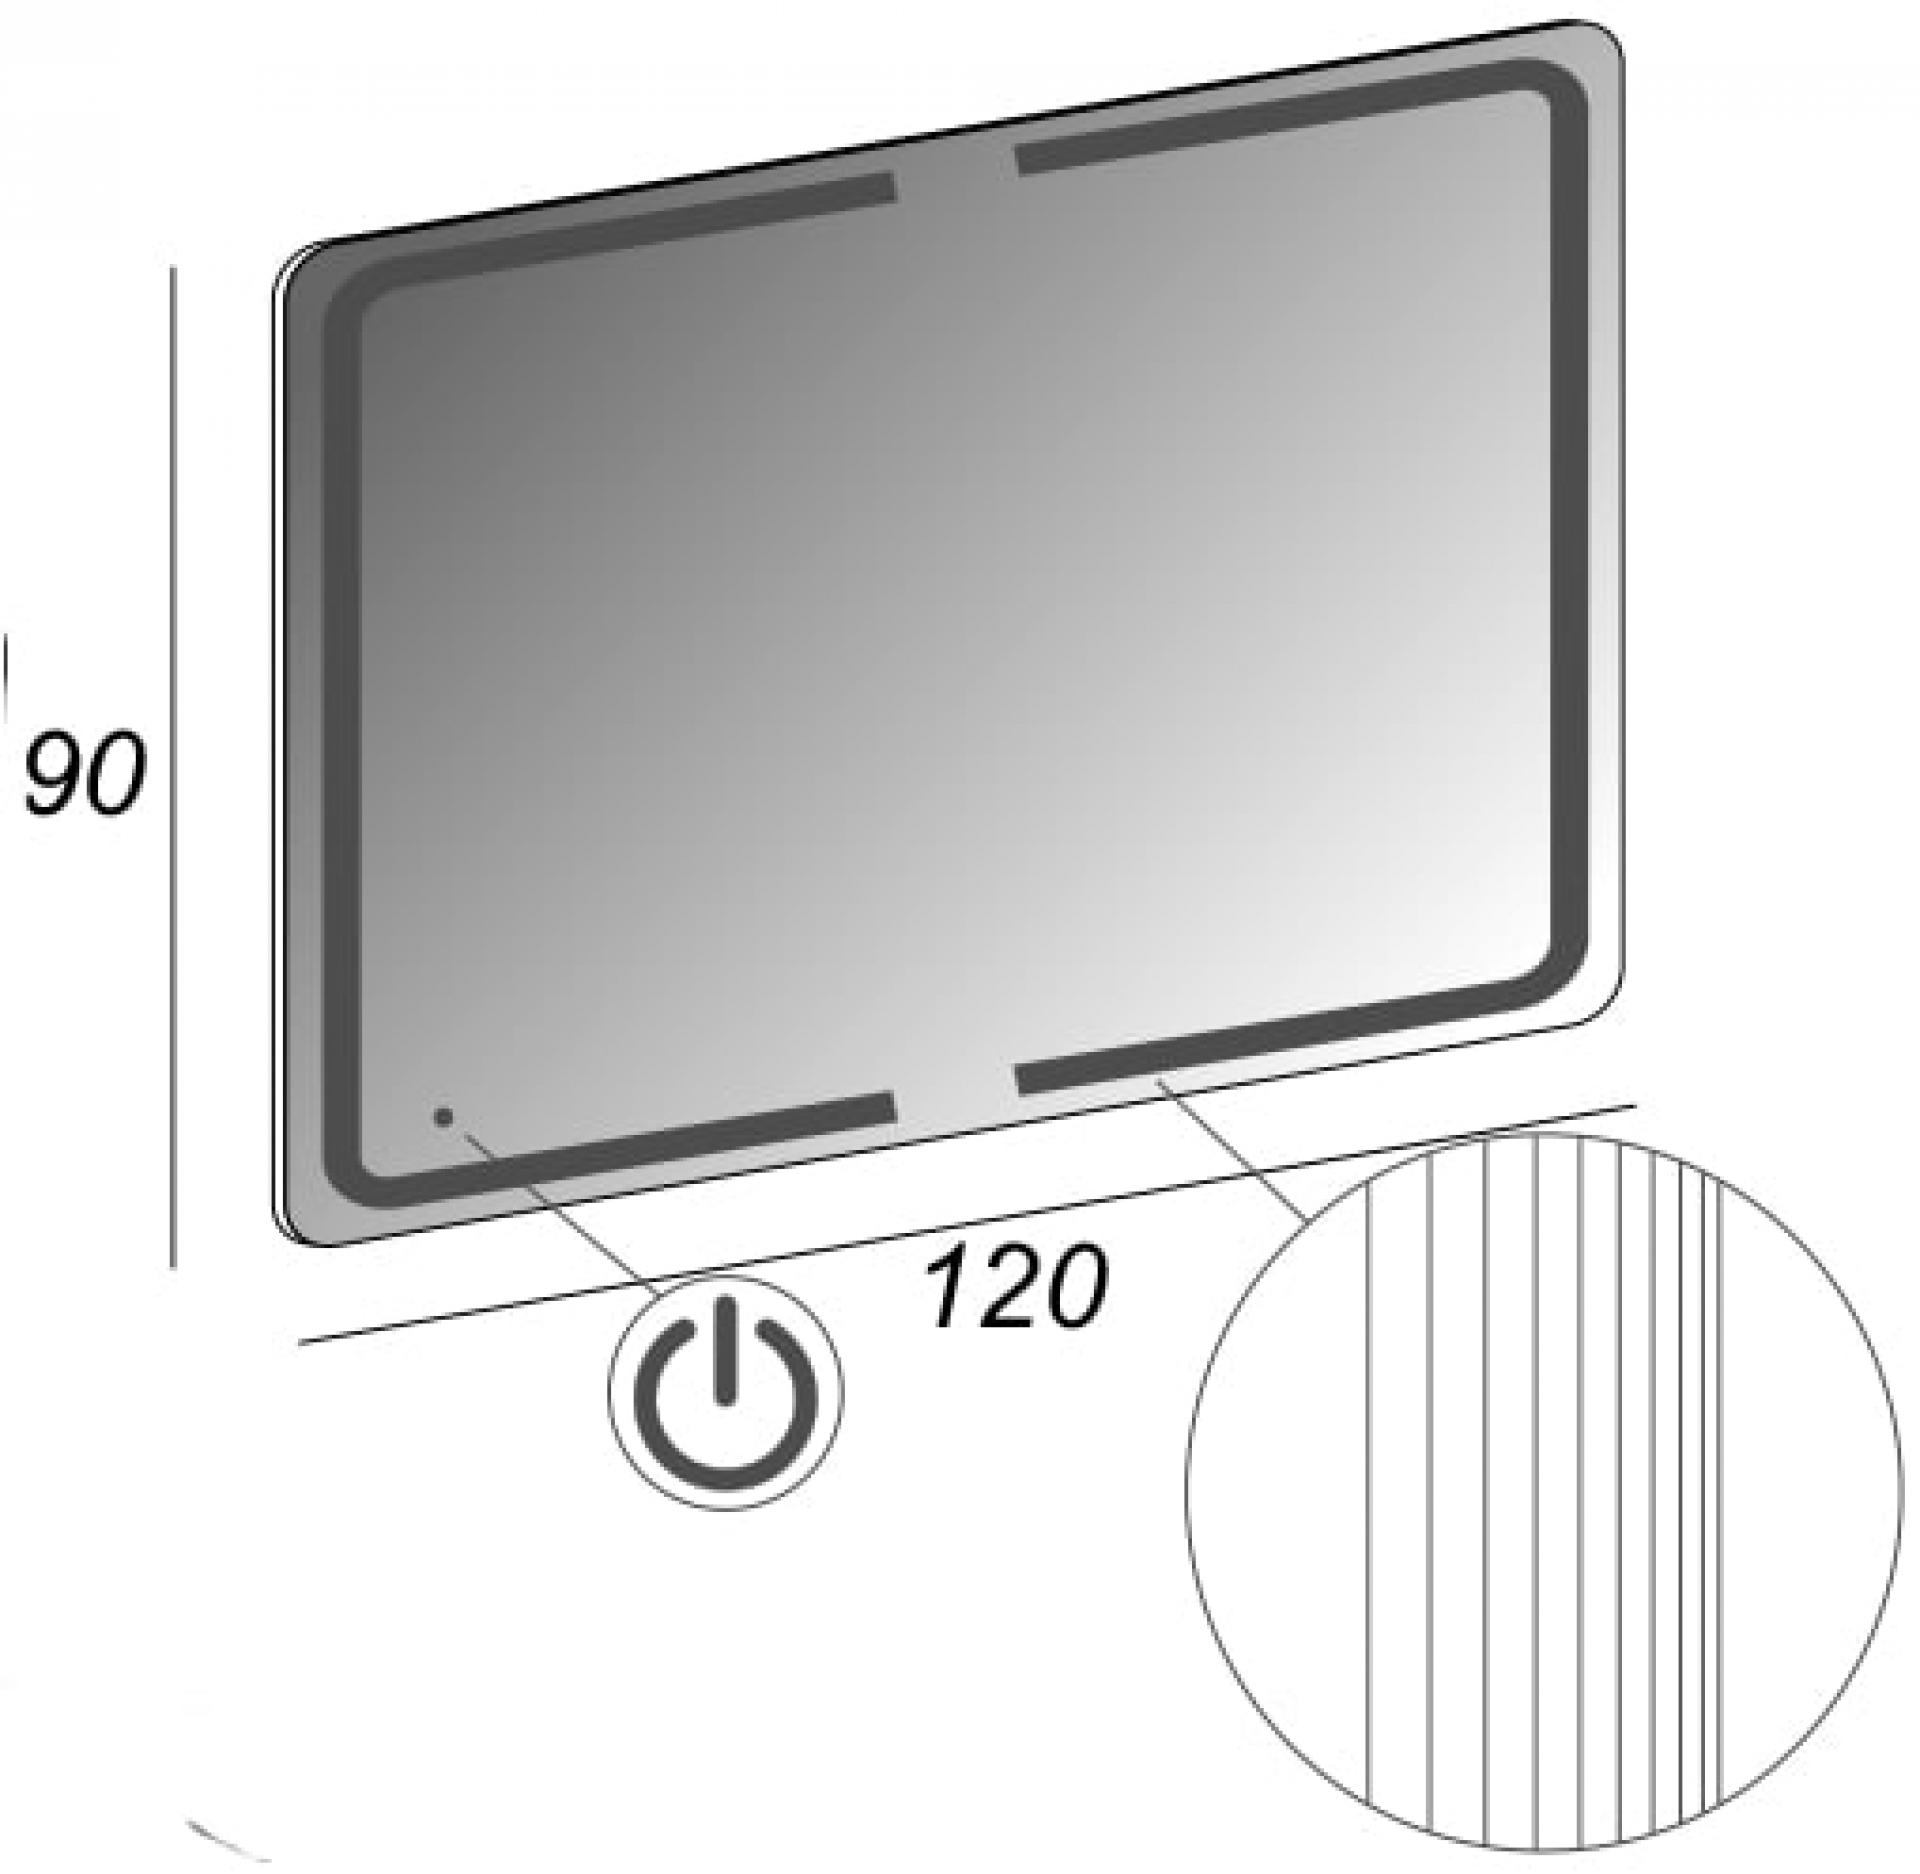 Зеркало Cezares 40312 c LED-подсветкой touch system 90х120